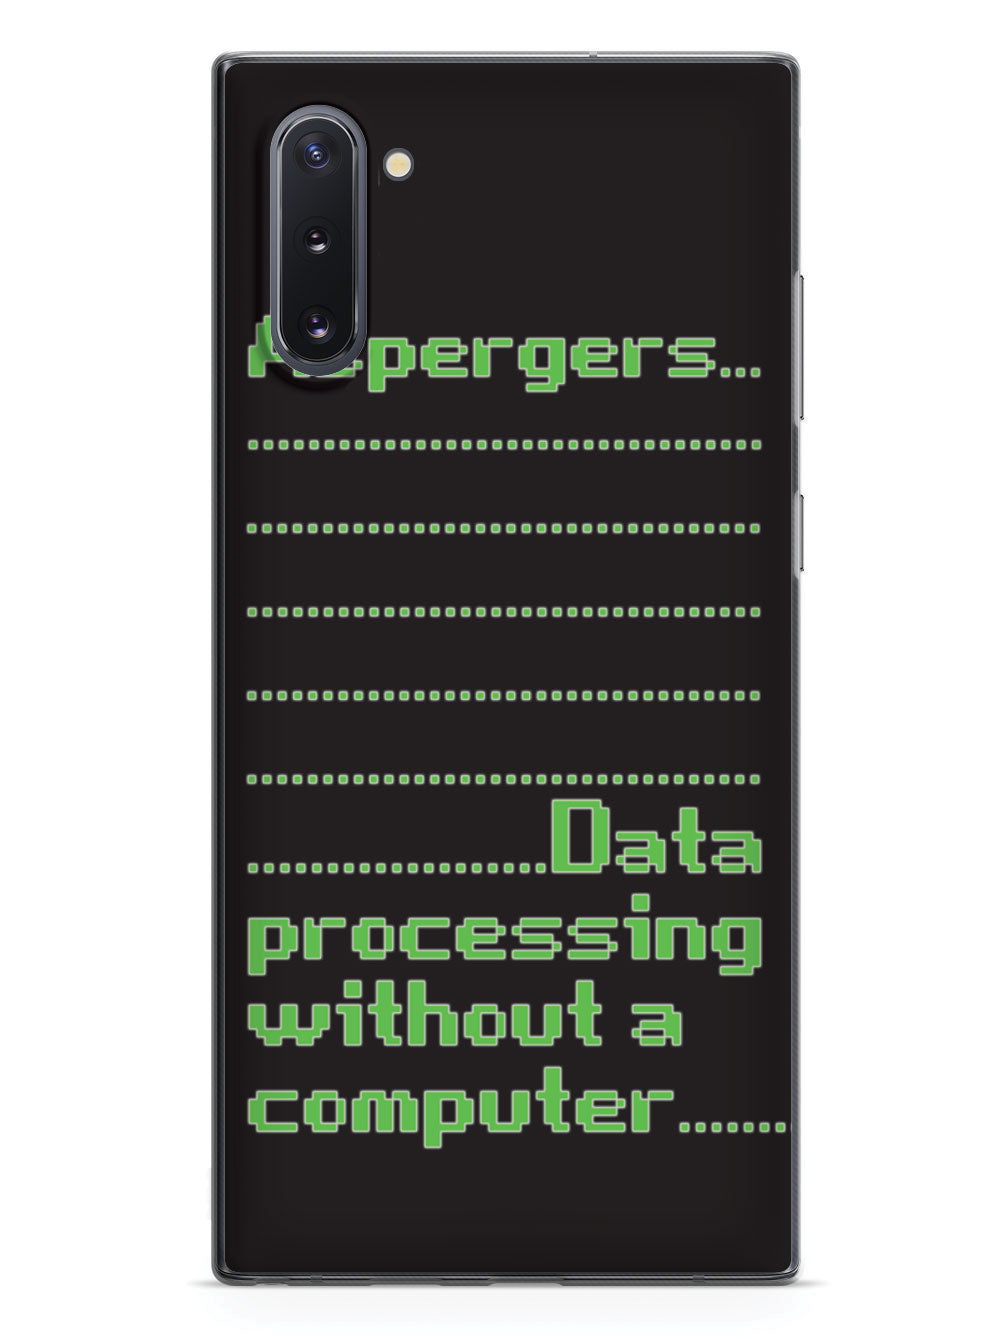 Aspergers Data Processing Case